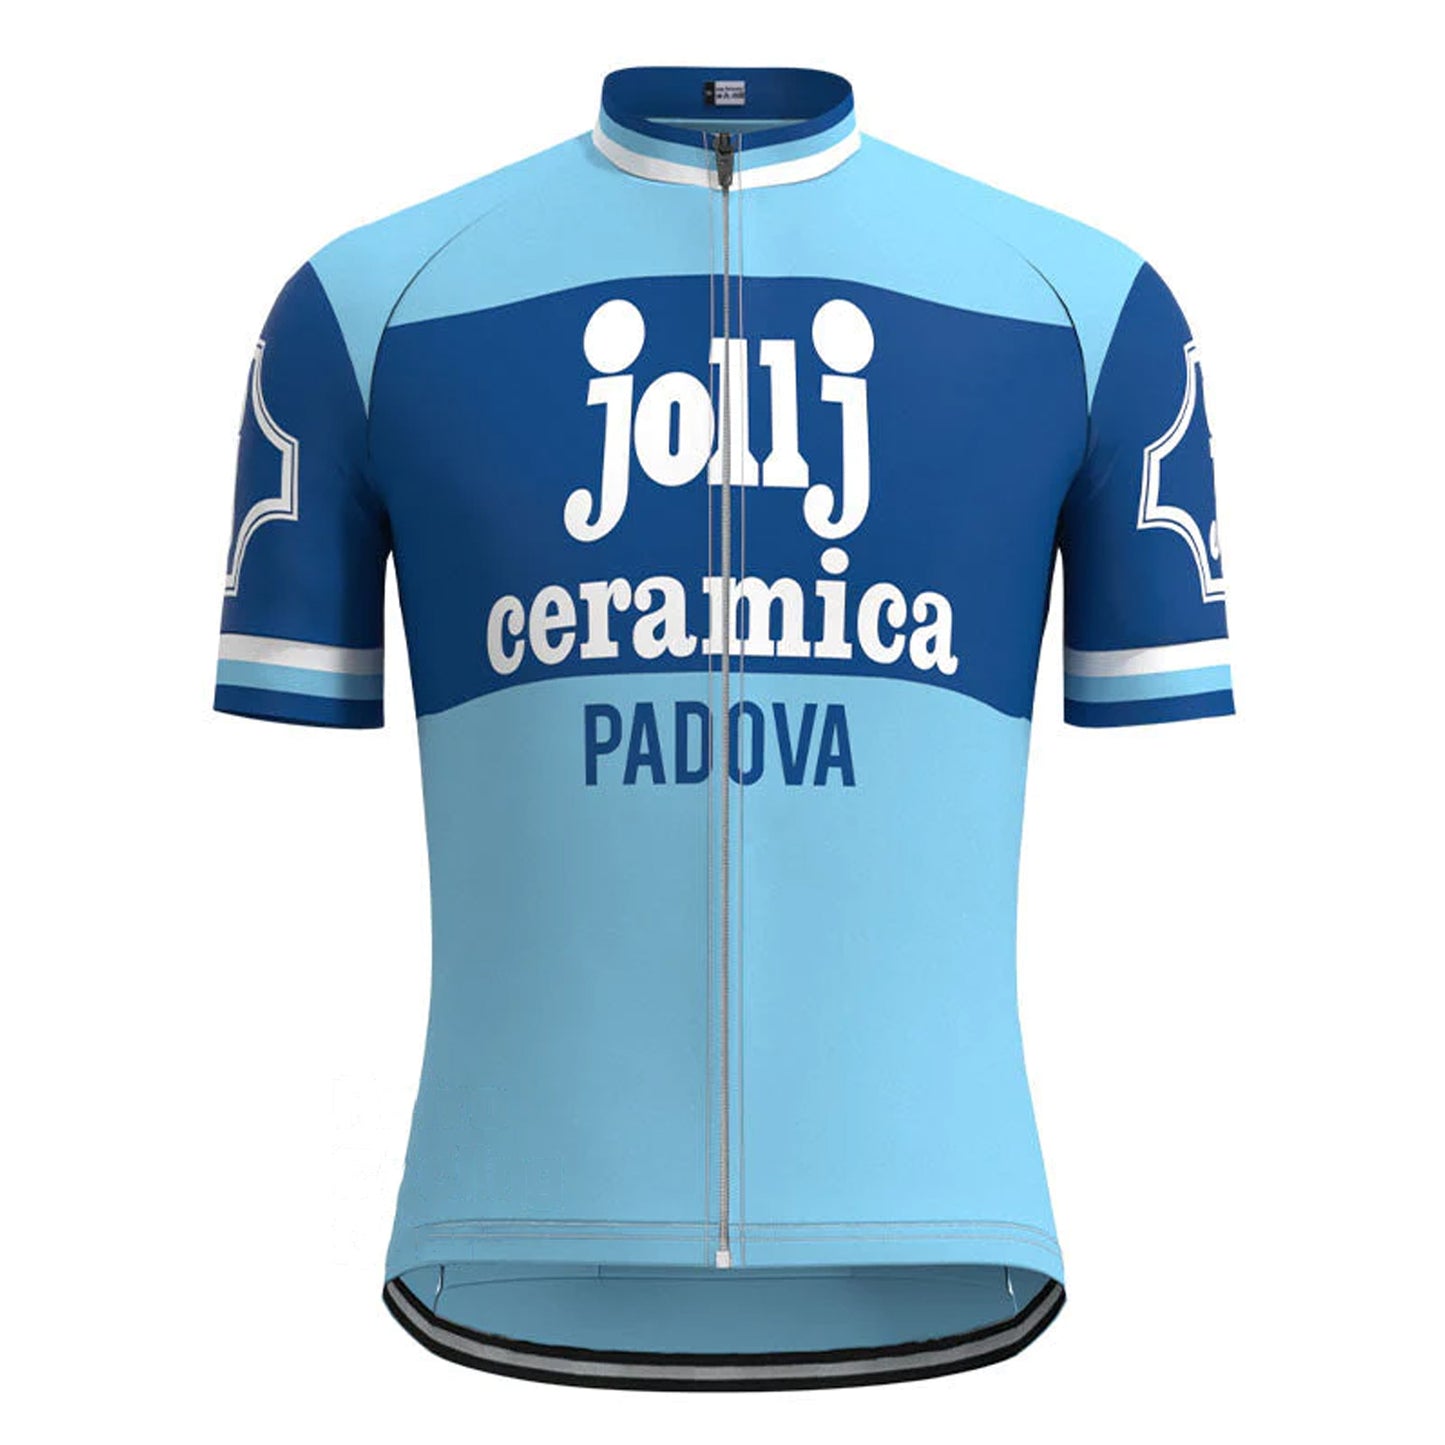 Jollj Ceramica Blue Vintage Short Sleeve Cycling Jersey Top